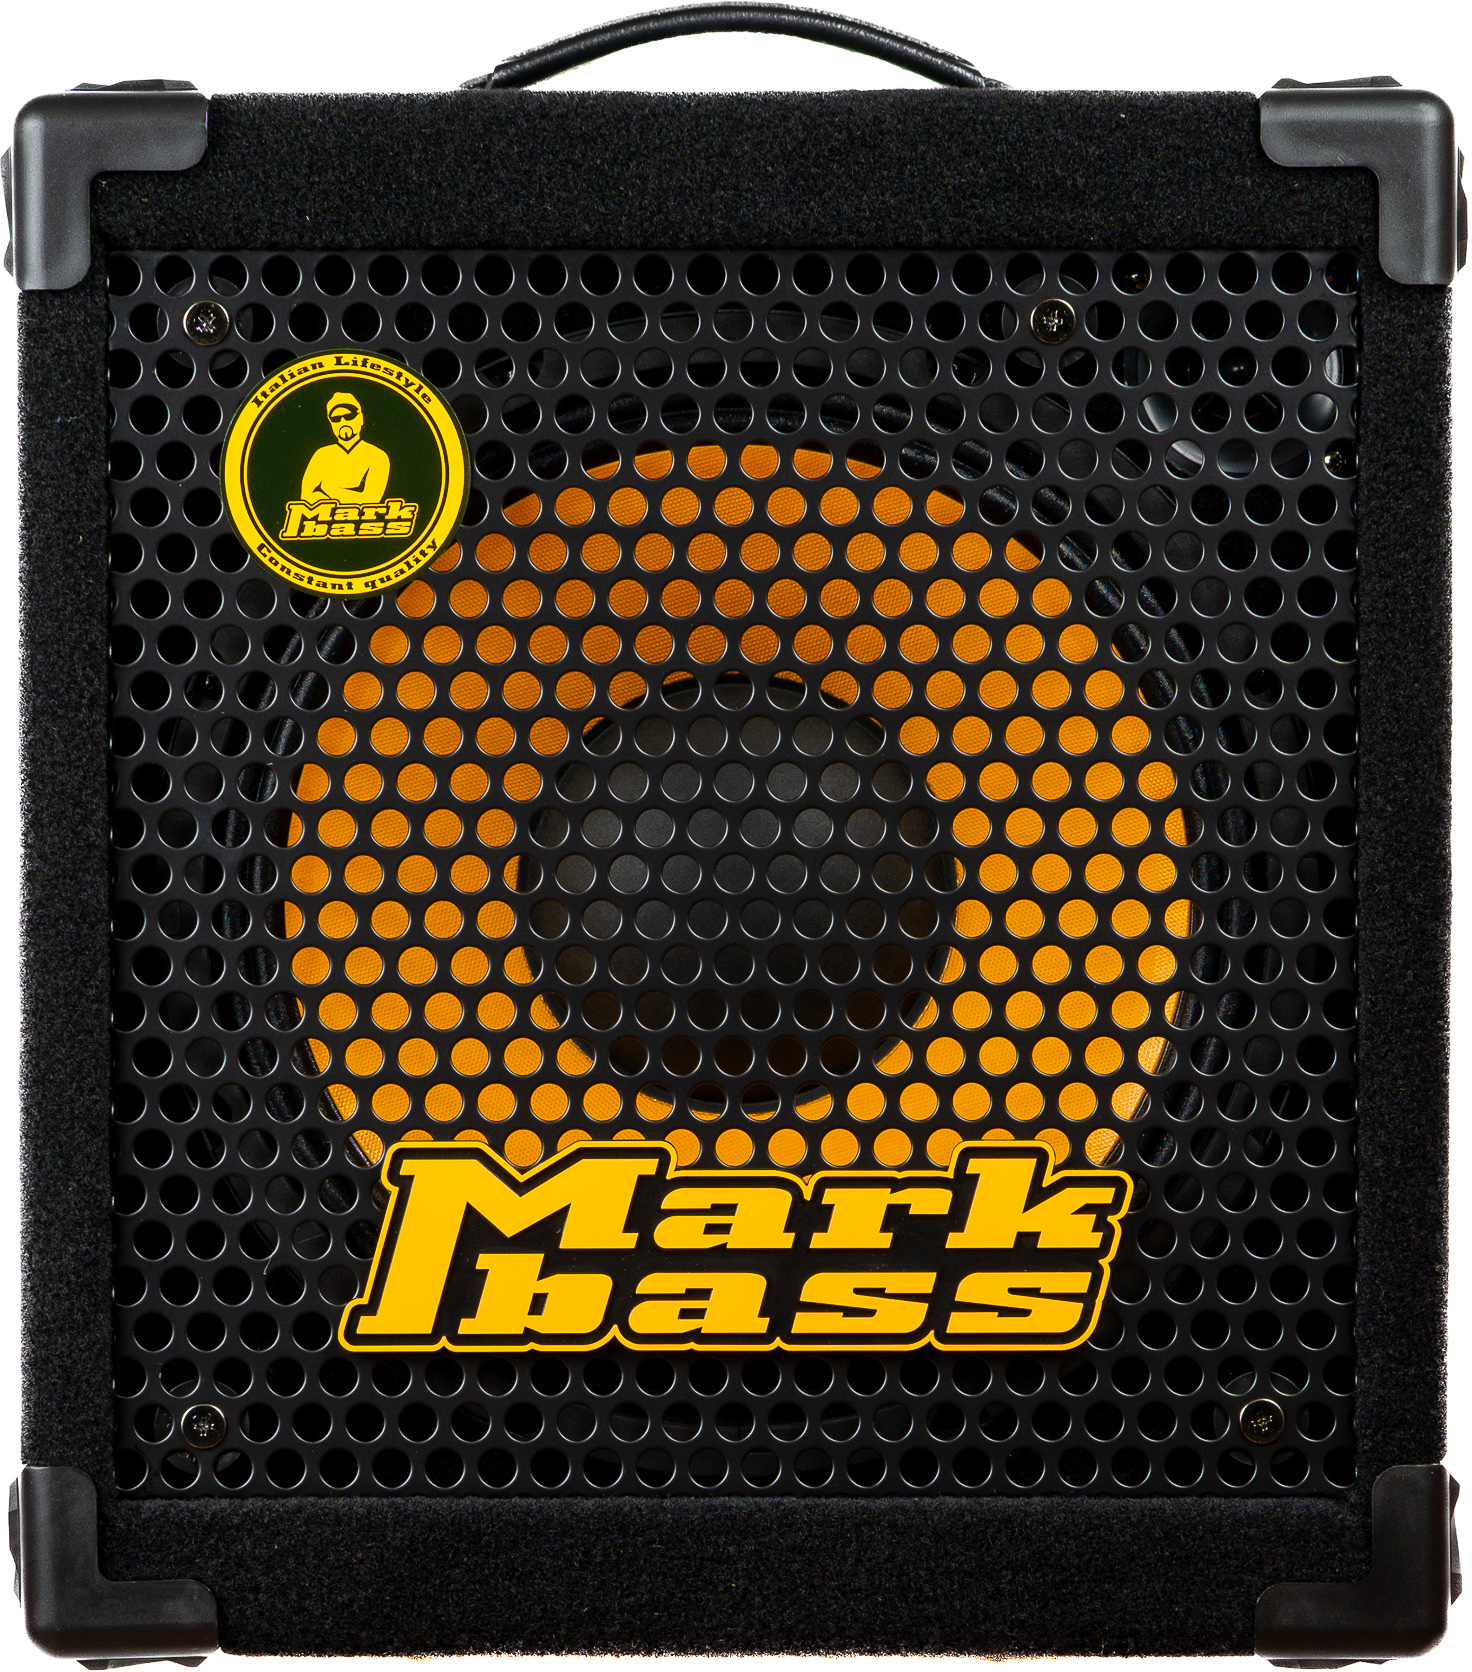 Markbass Mini Cmd 121 P V Piezo 1x12 500w Black - Bass combo amp - Main picture